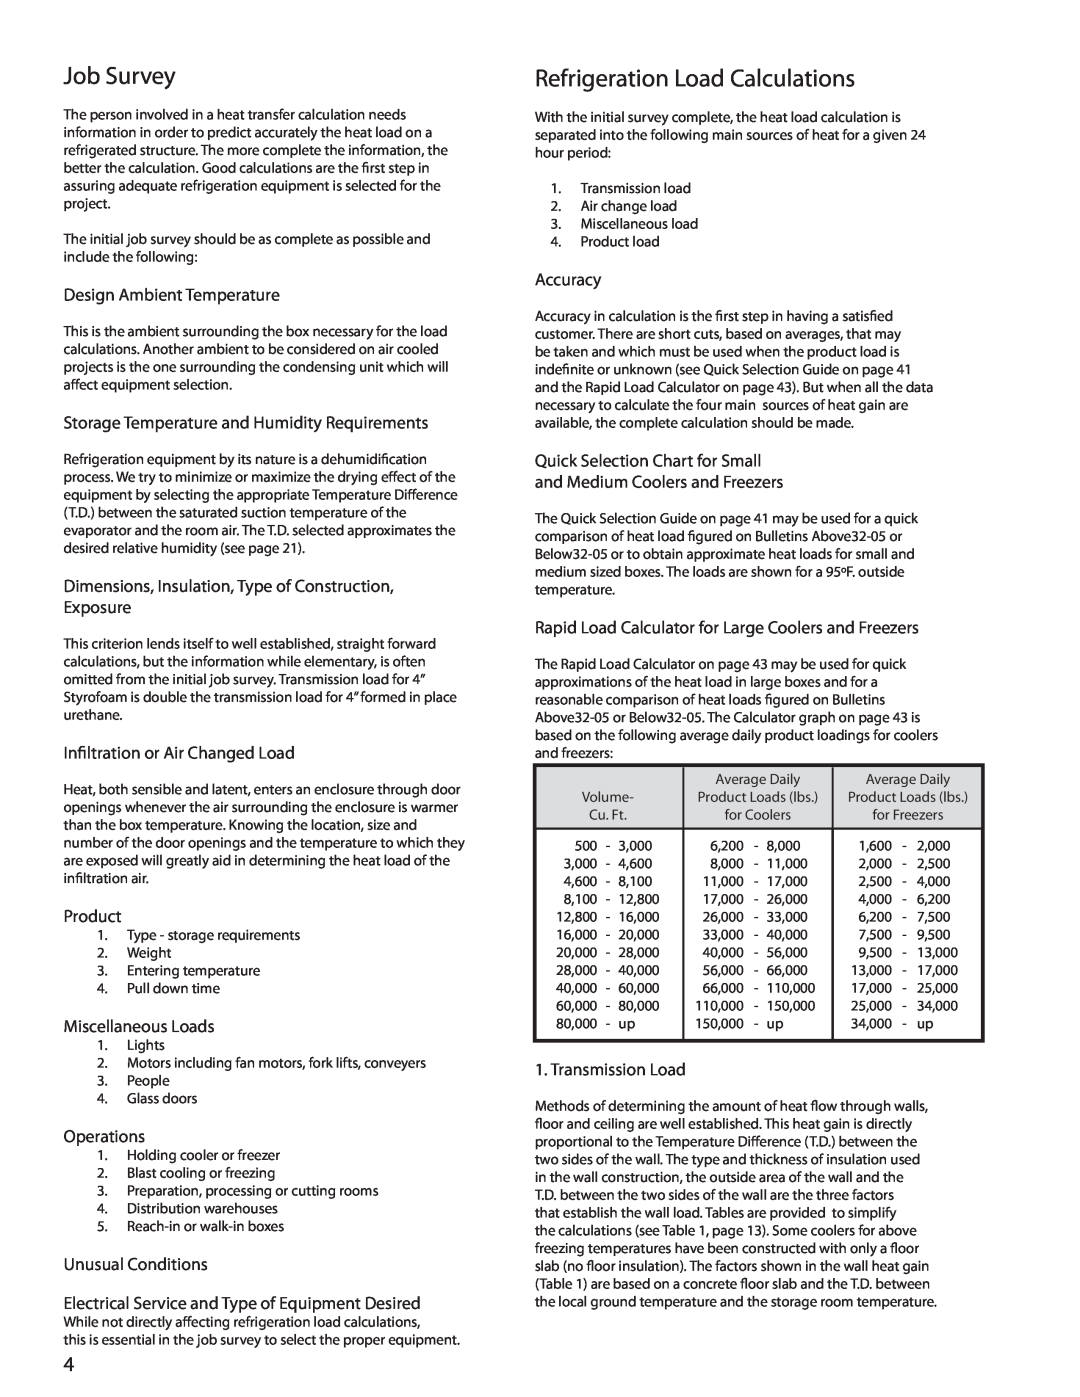 Heatcraft Refrigeration Products H-ENGM0806, H-ENGM0408 manual Job Survey, Refrigeration Load Calculations 